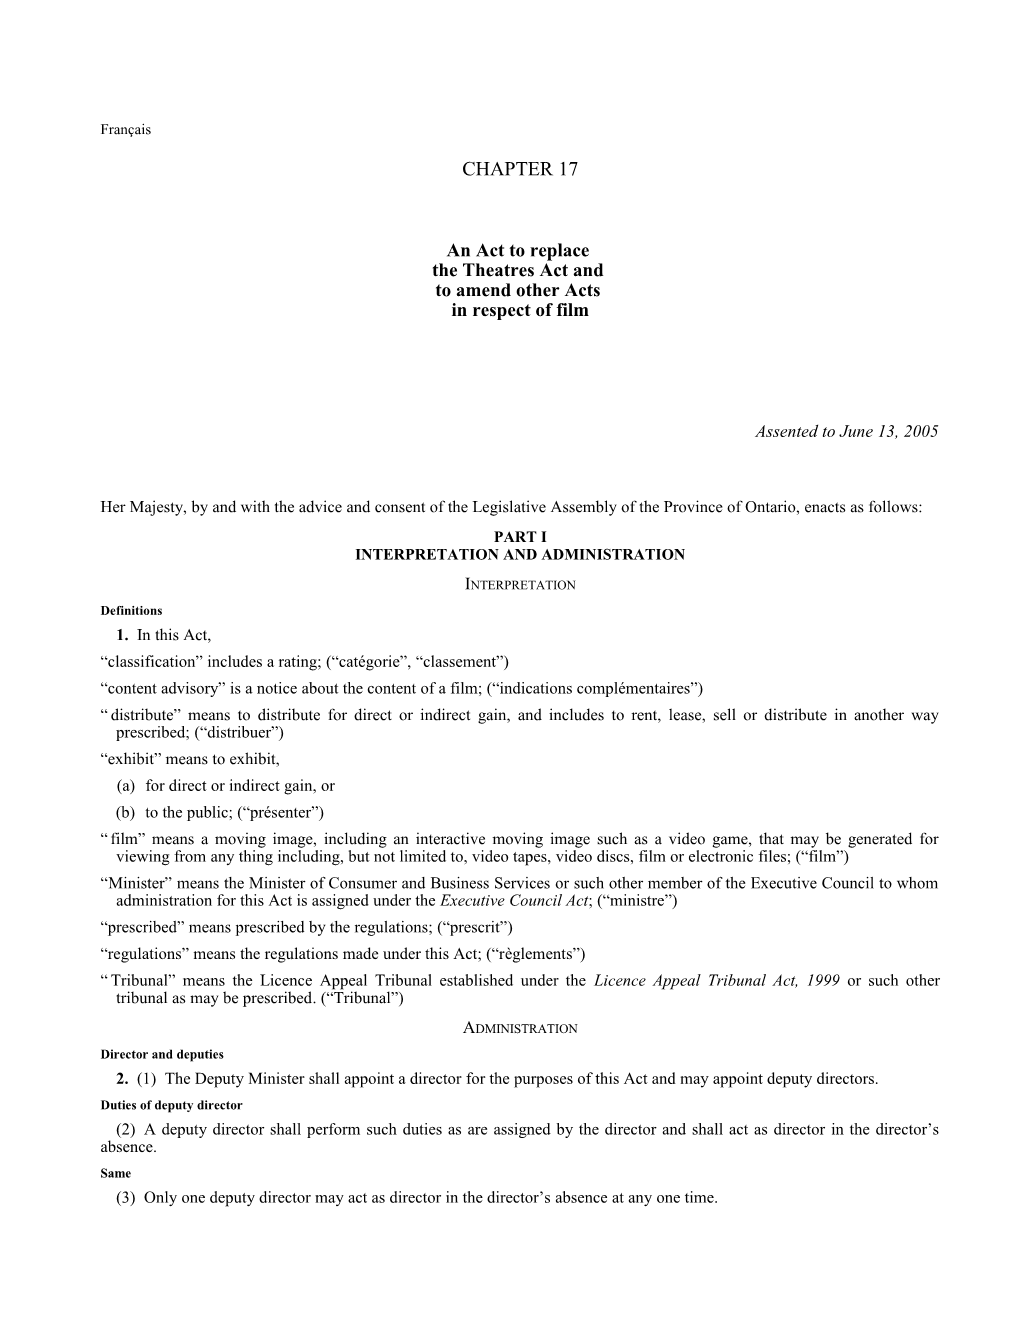 Film Classification Act, 2005, S.O. 2005, C. 17 - Bill 158